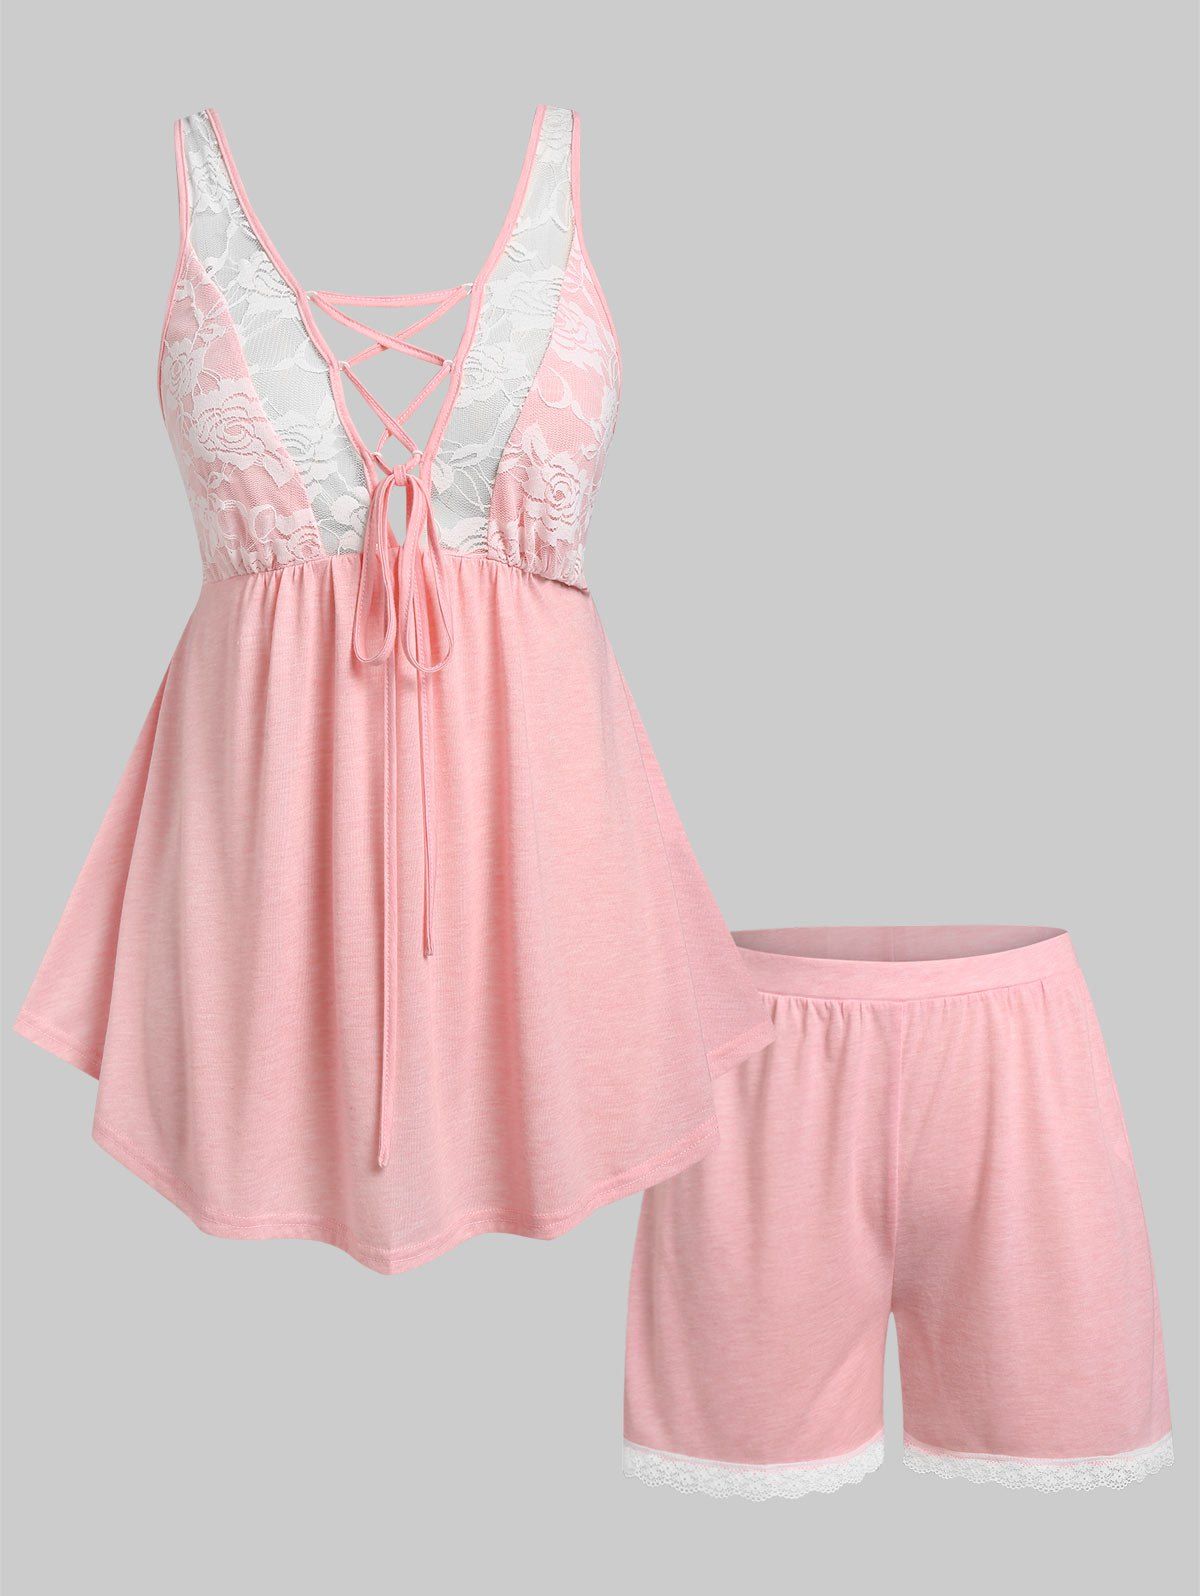 Plus Size Lace Sheer Lace-up Pajama Shorts Set - LIGHT PINK L